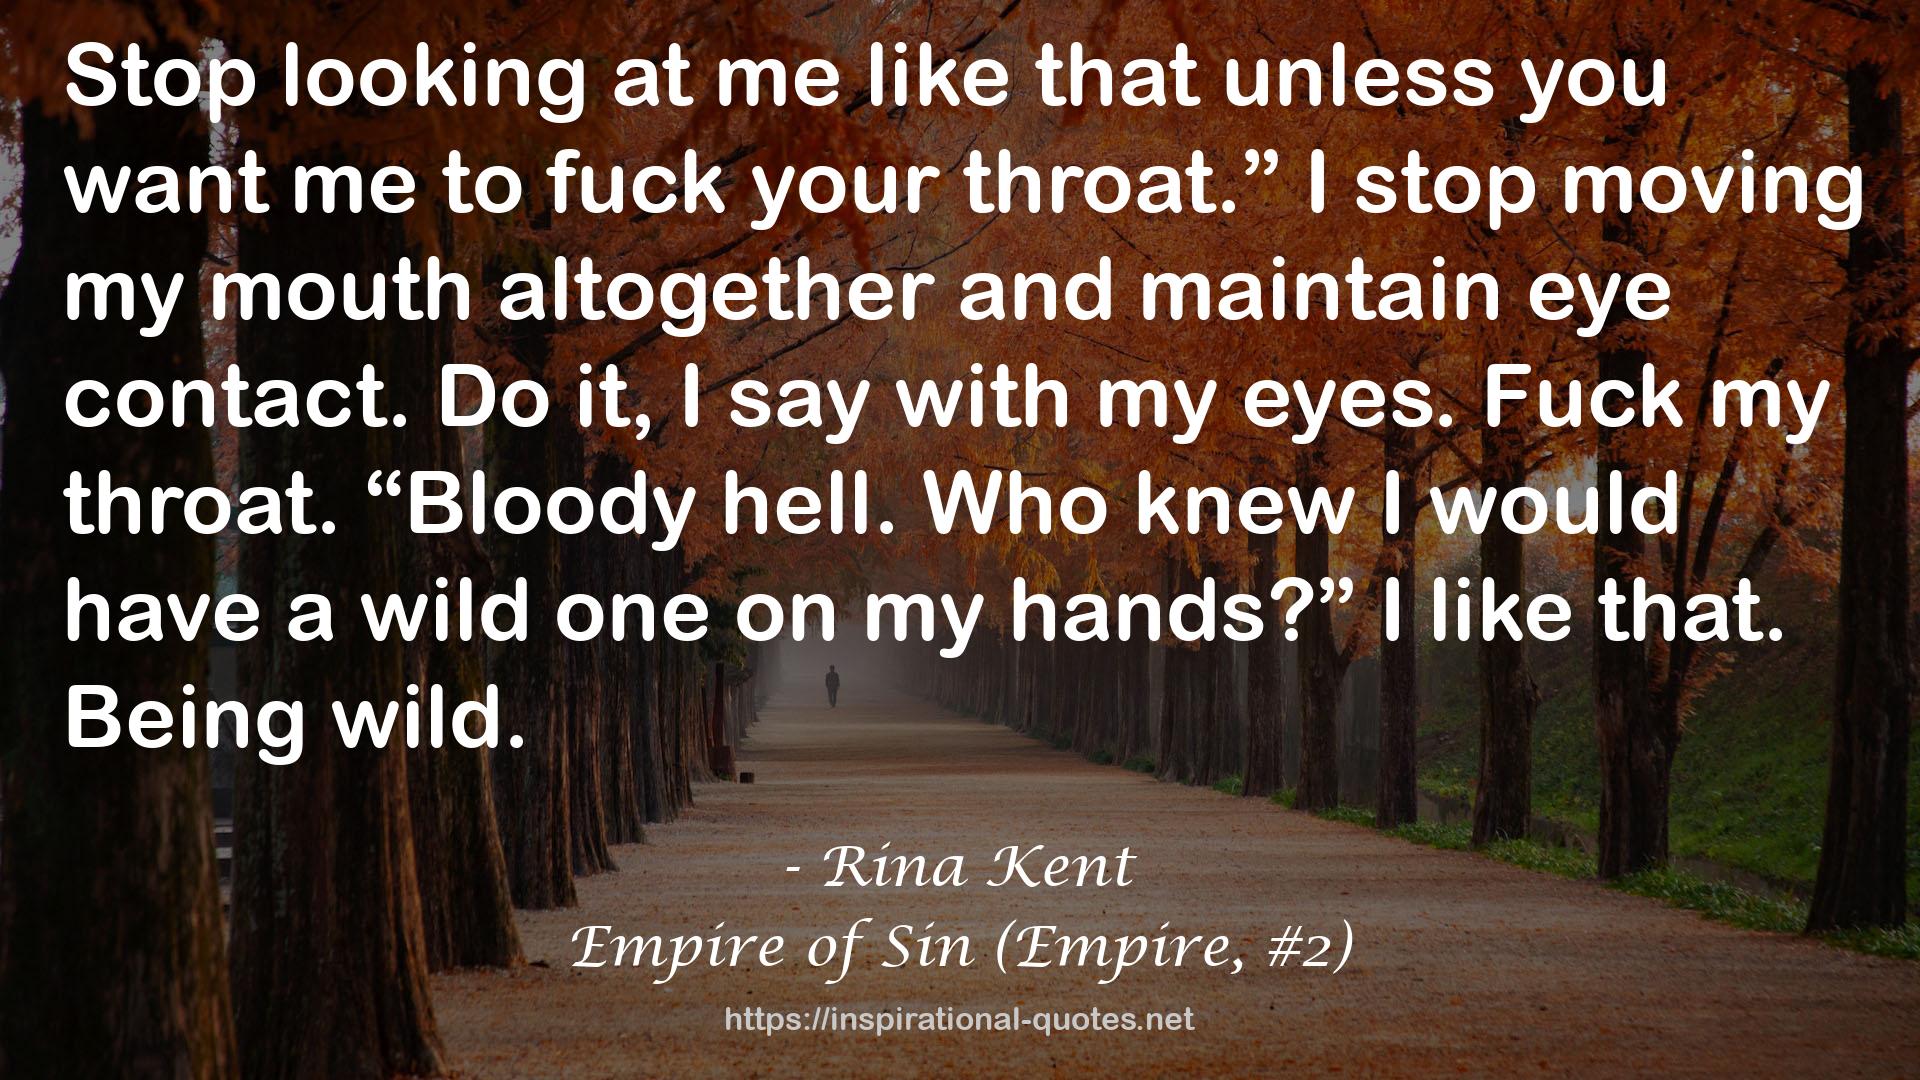 Empire of Sin (Empire, #2) QUOTES